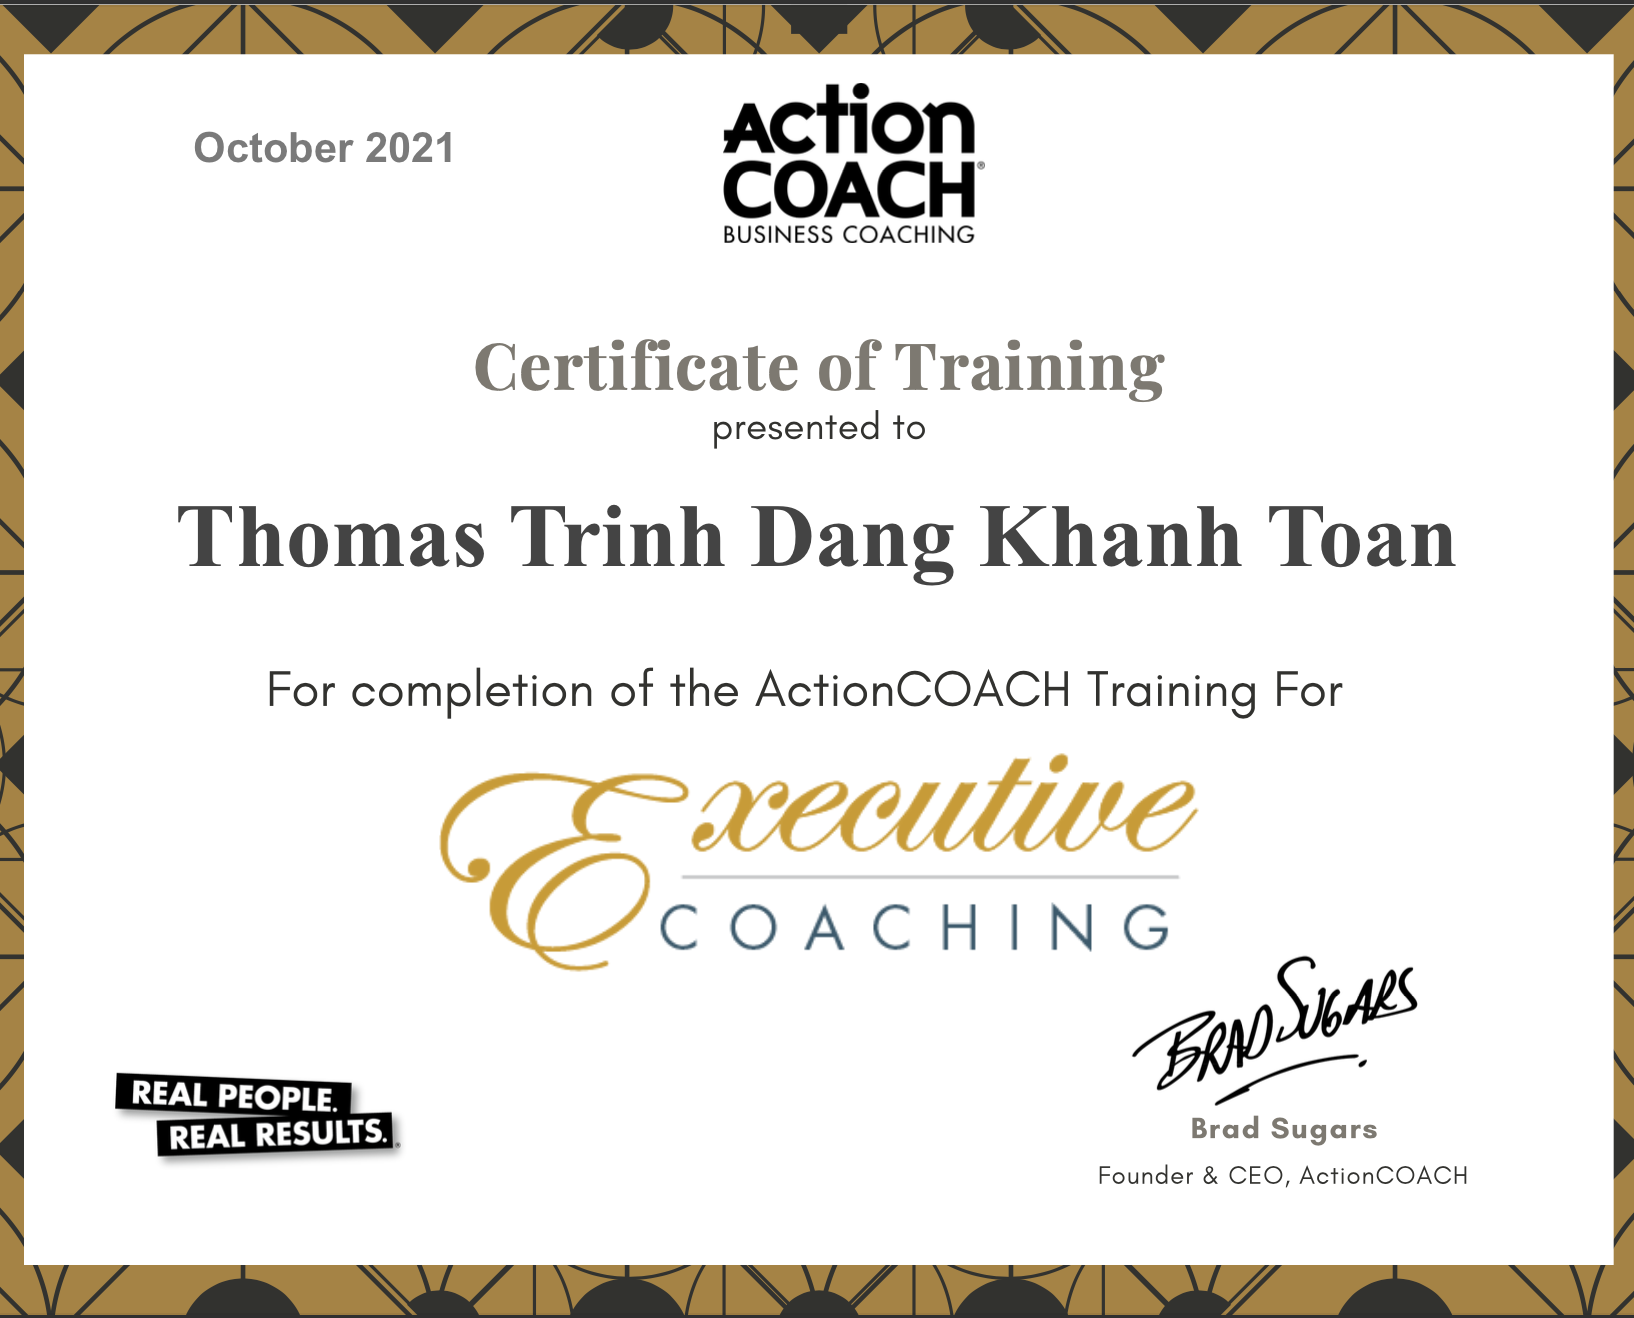 Business Coach Thomas Trinh Toan